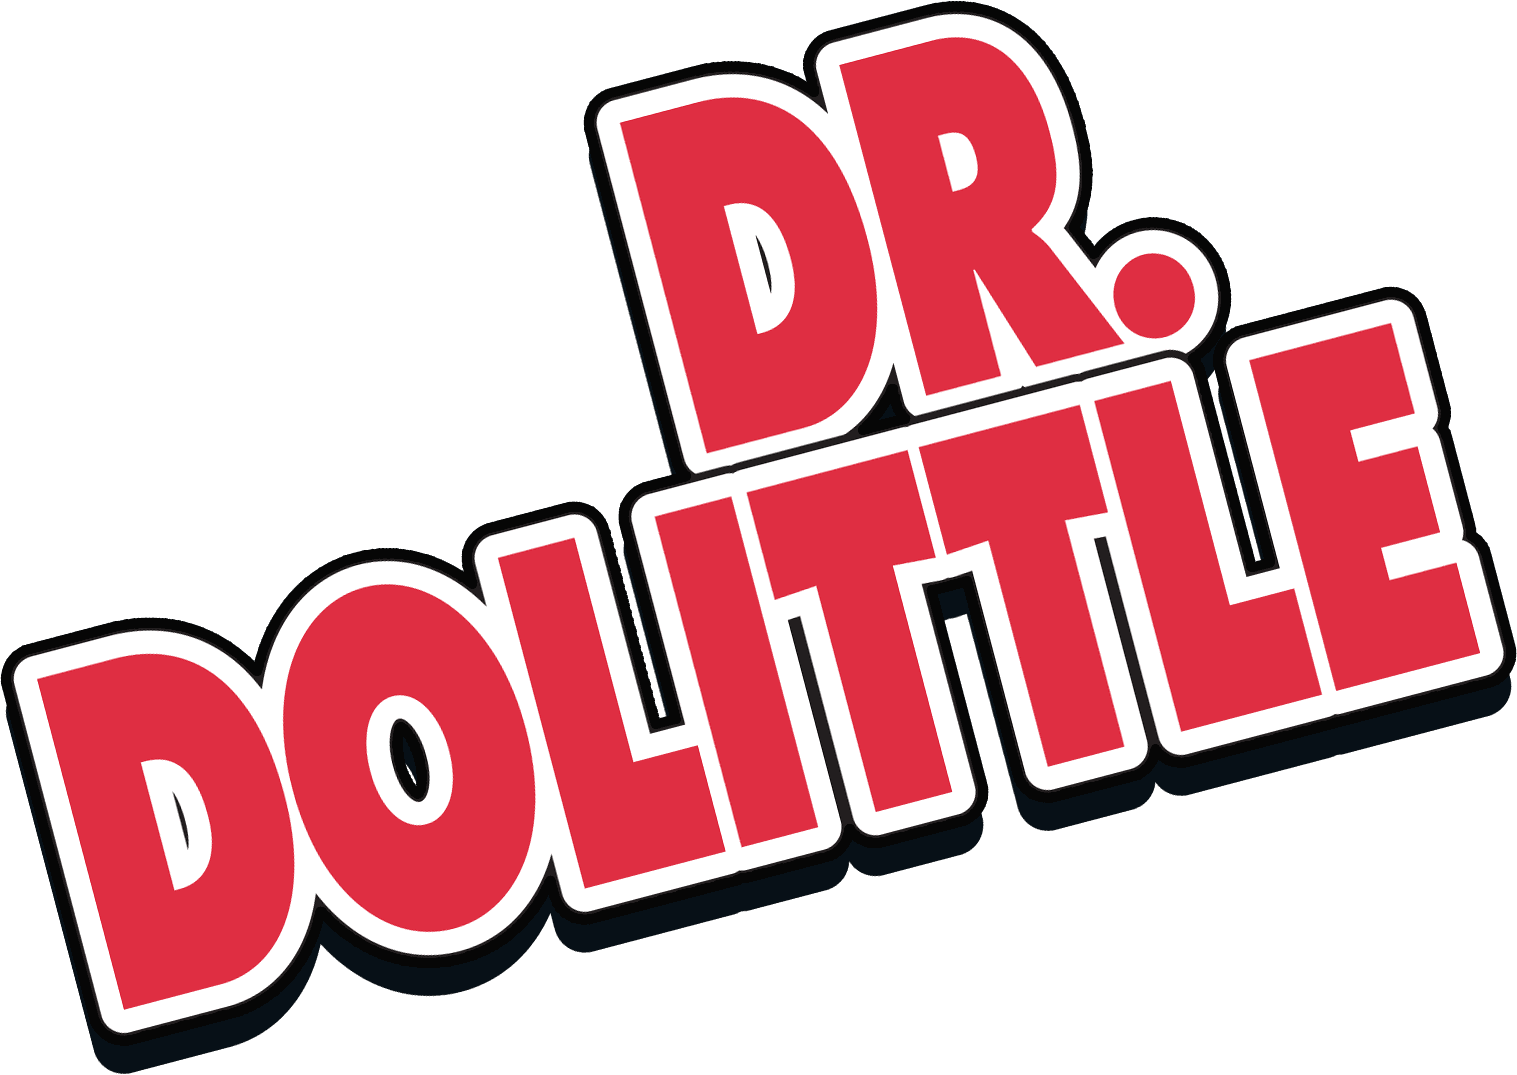 Doctor Dolittle logo